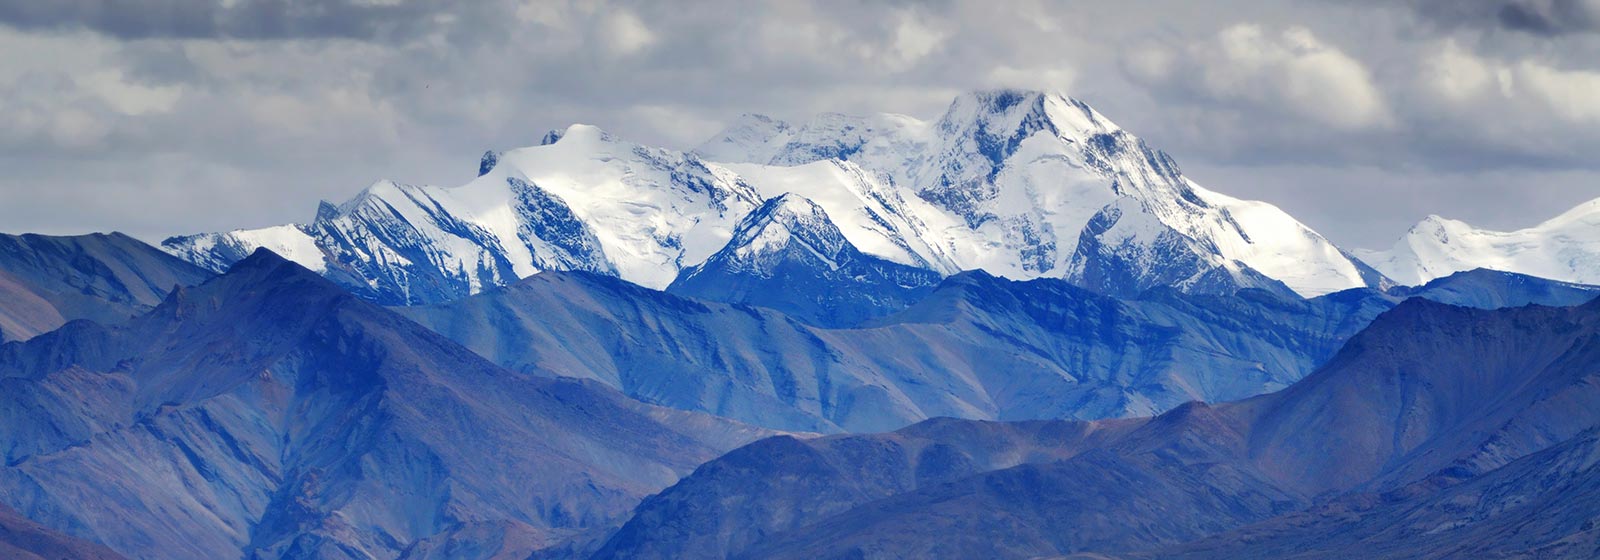 Trekkingtour mit Blick auf den Himalaya